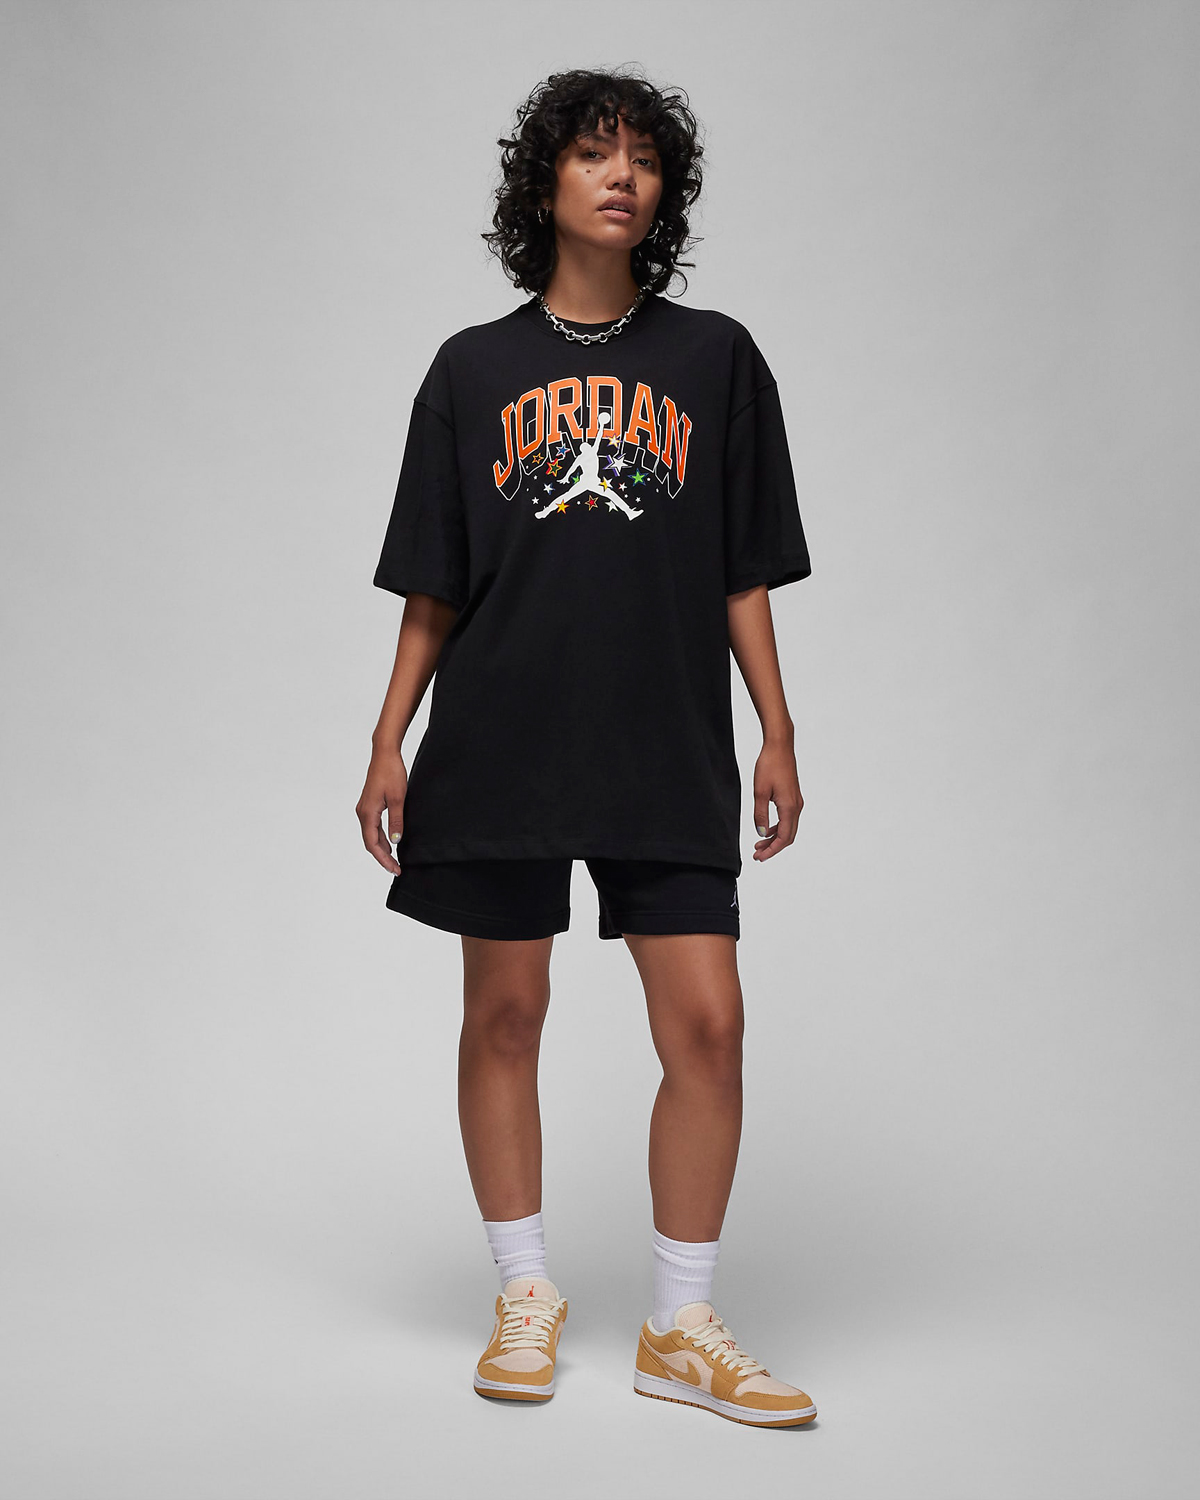 Jordan-Womens-T-Shirt-Black-Brilliant-Orange